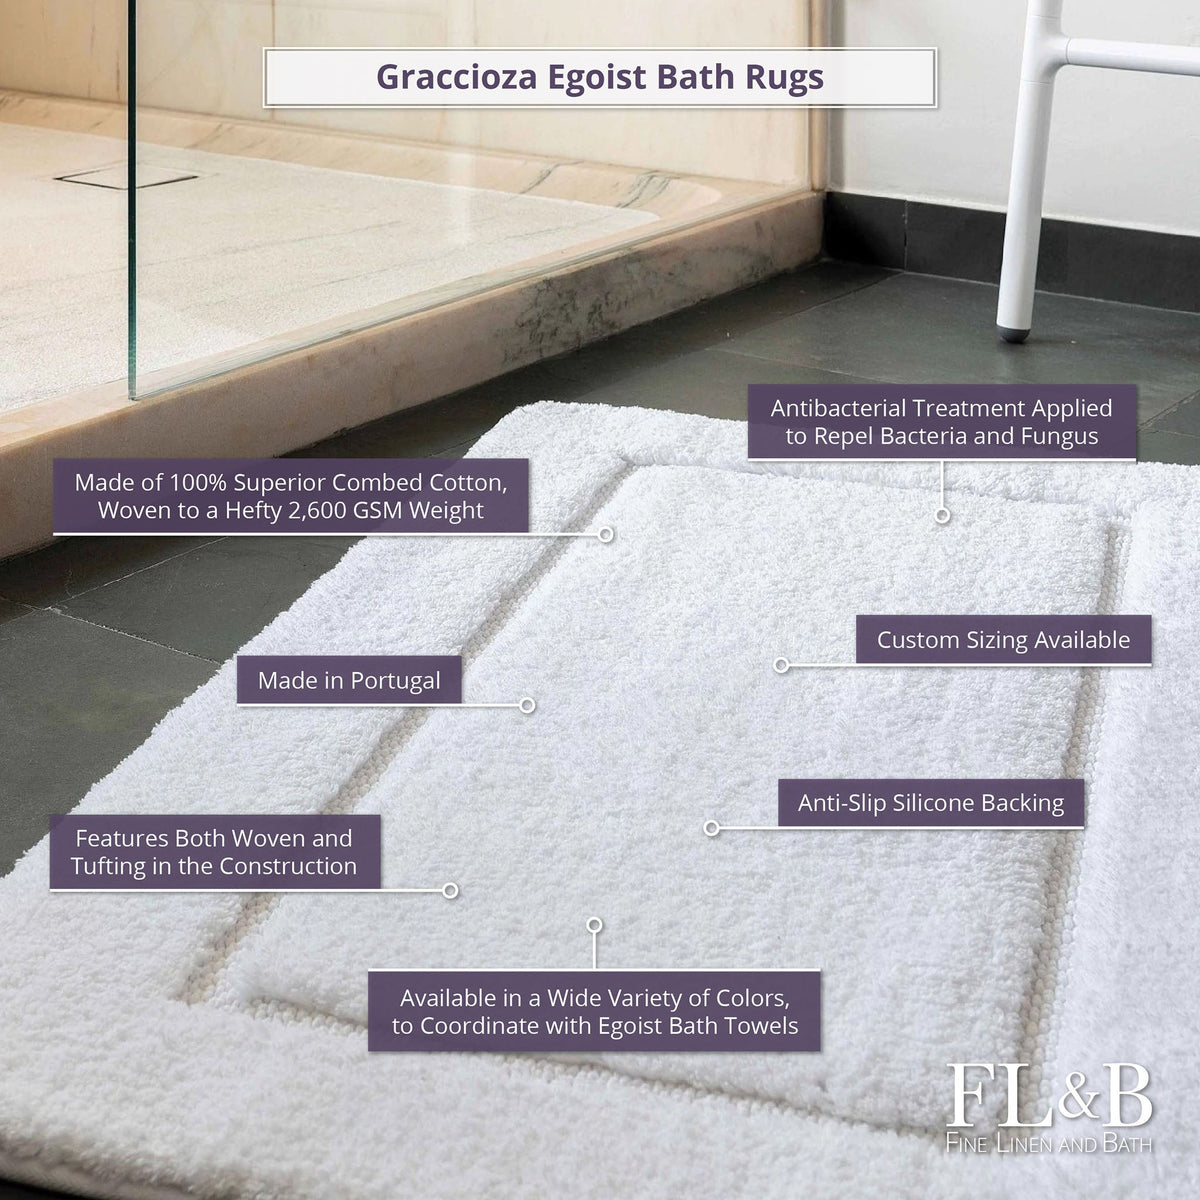 Graccioza Egoist Bath Rug on Bathroom Floor with Descriptive Labels